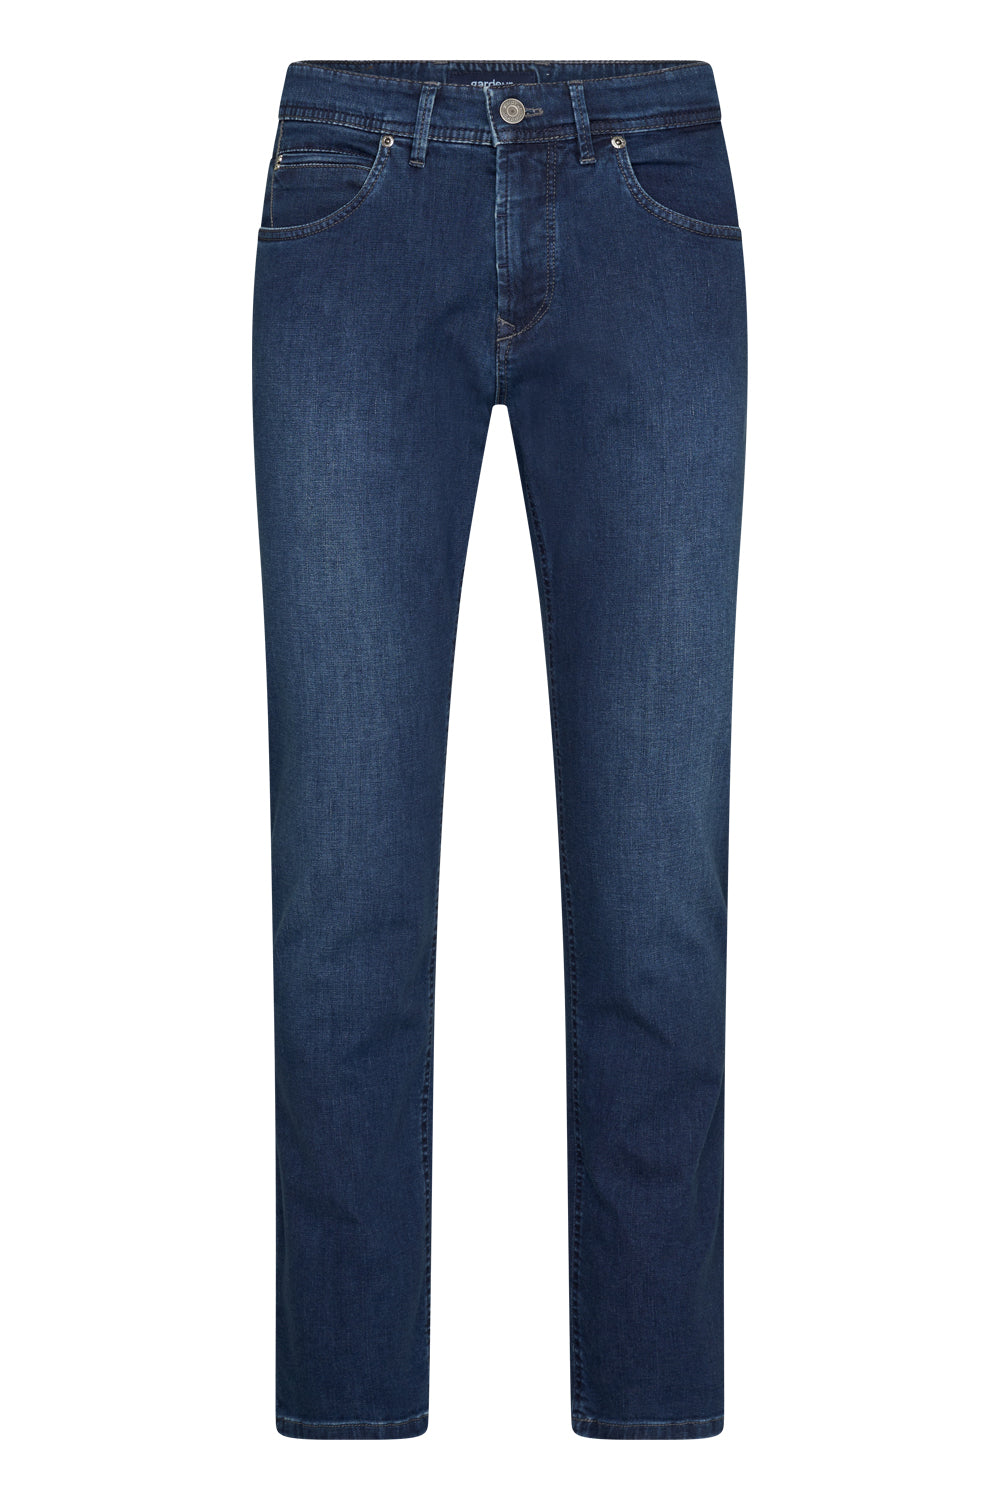 GARDEUR Bradley Move Lite Denim Jeans INDIGO 32inch Length